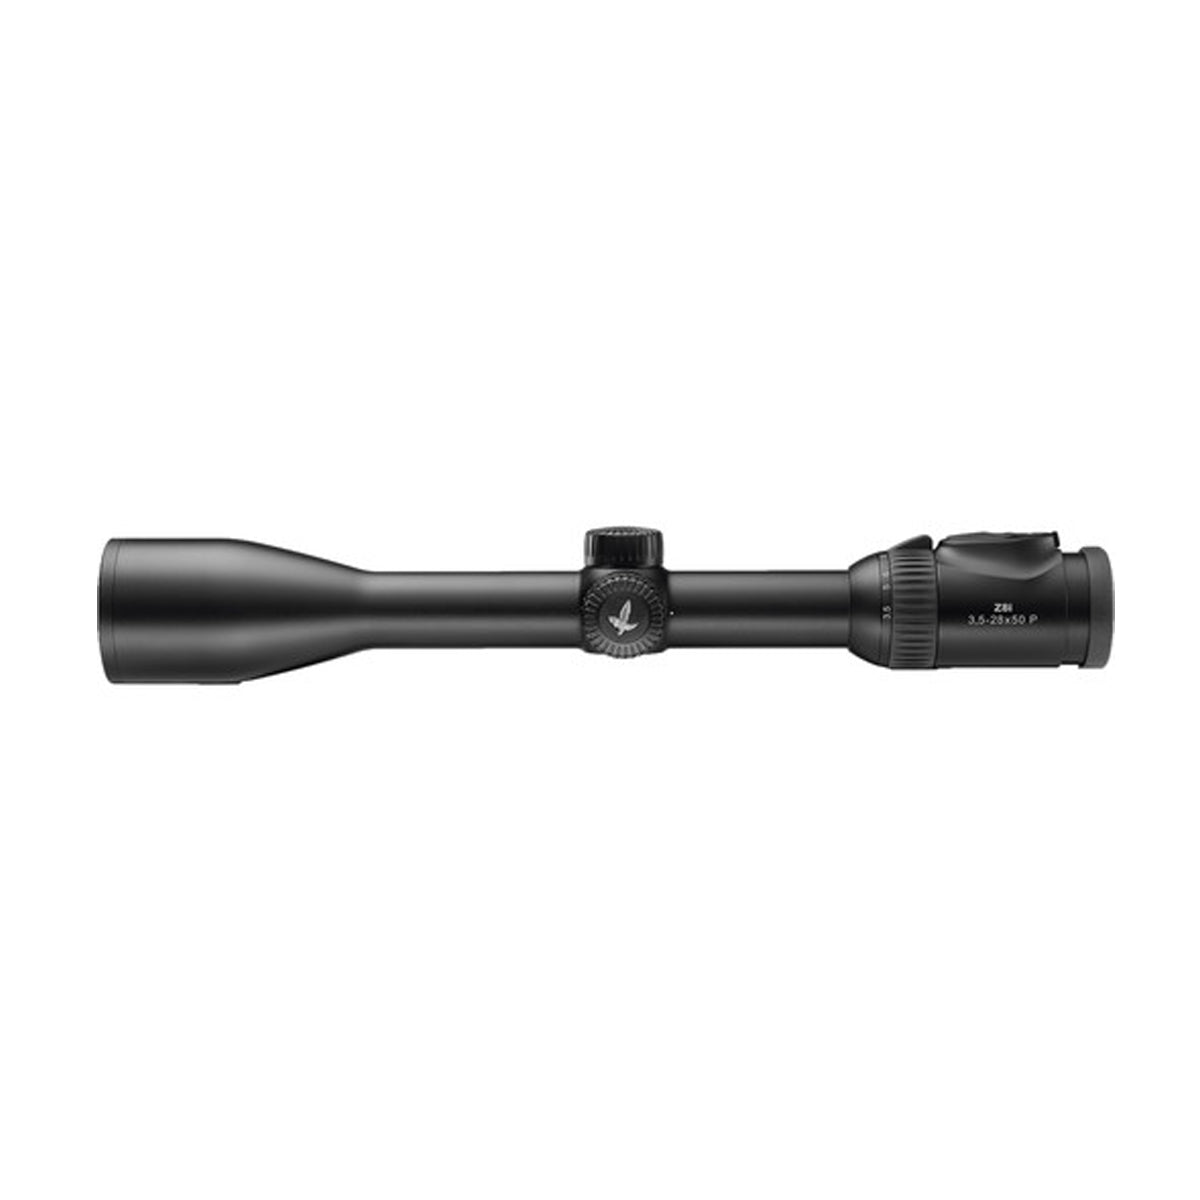 Swarovski Z8i 3.5-28x50 BRX-I Riflescope in  by GOHUNT | Swarovski Optik - GOHUNT Shop